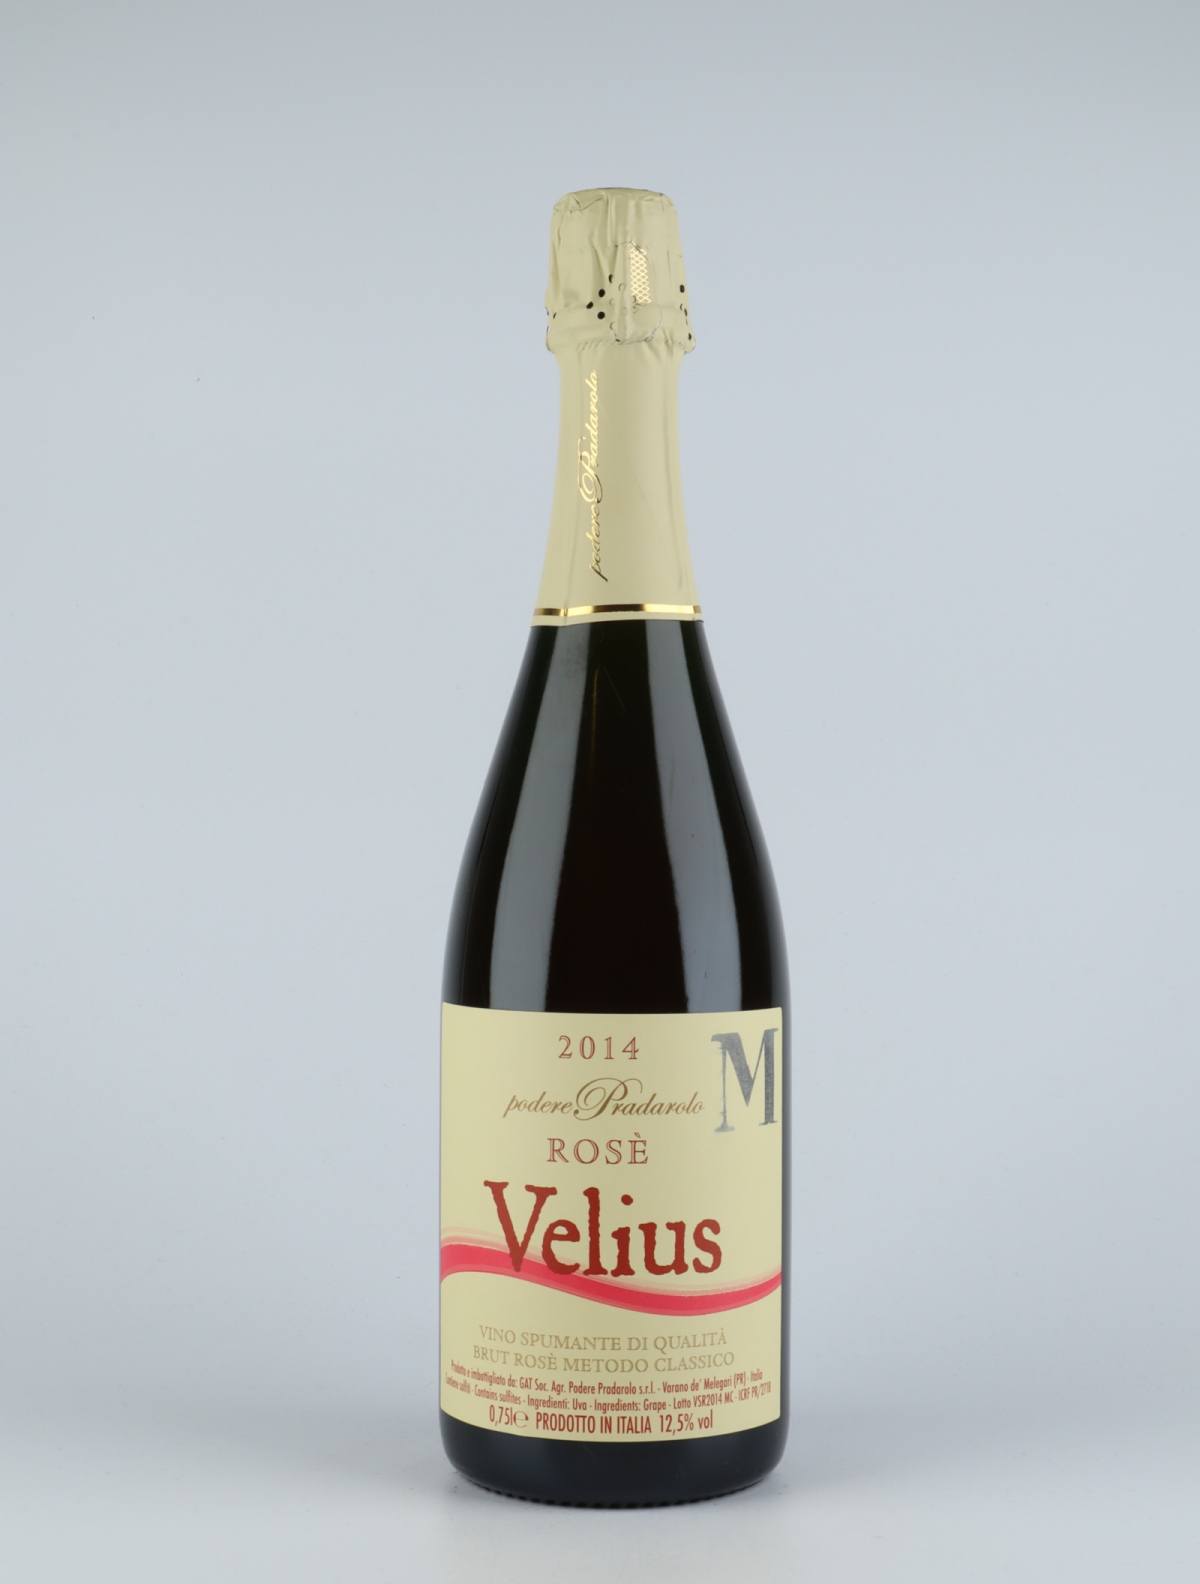 En flaske 2014 Velius Rosé Metodo Classico Mousserende fra Podere Pradarolo, Emilia-Romagna i Italien